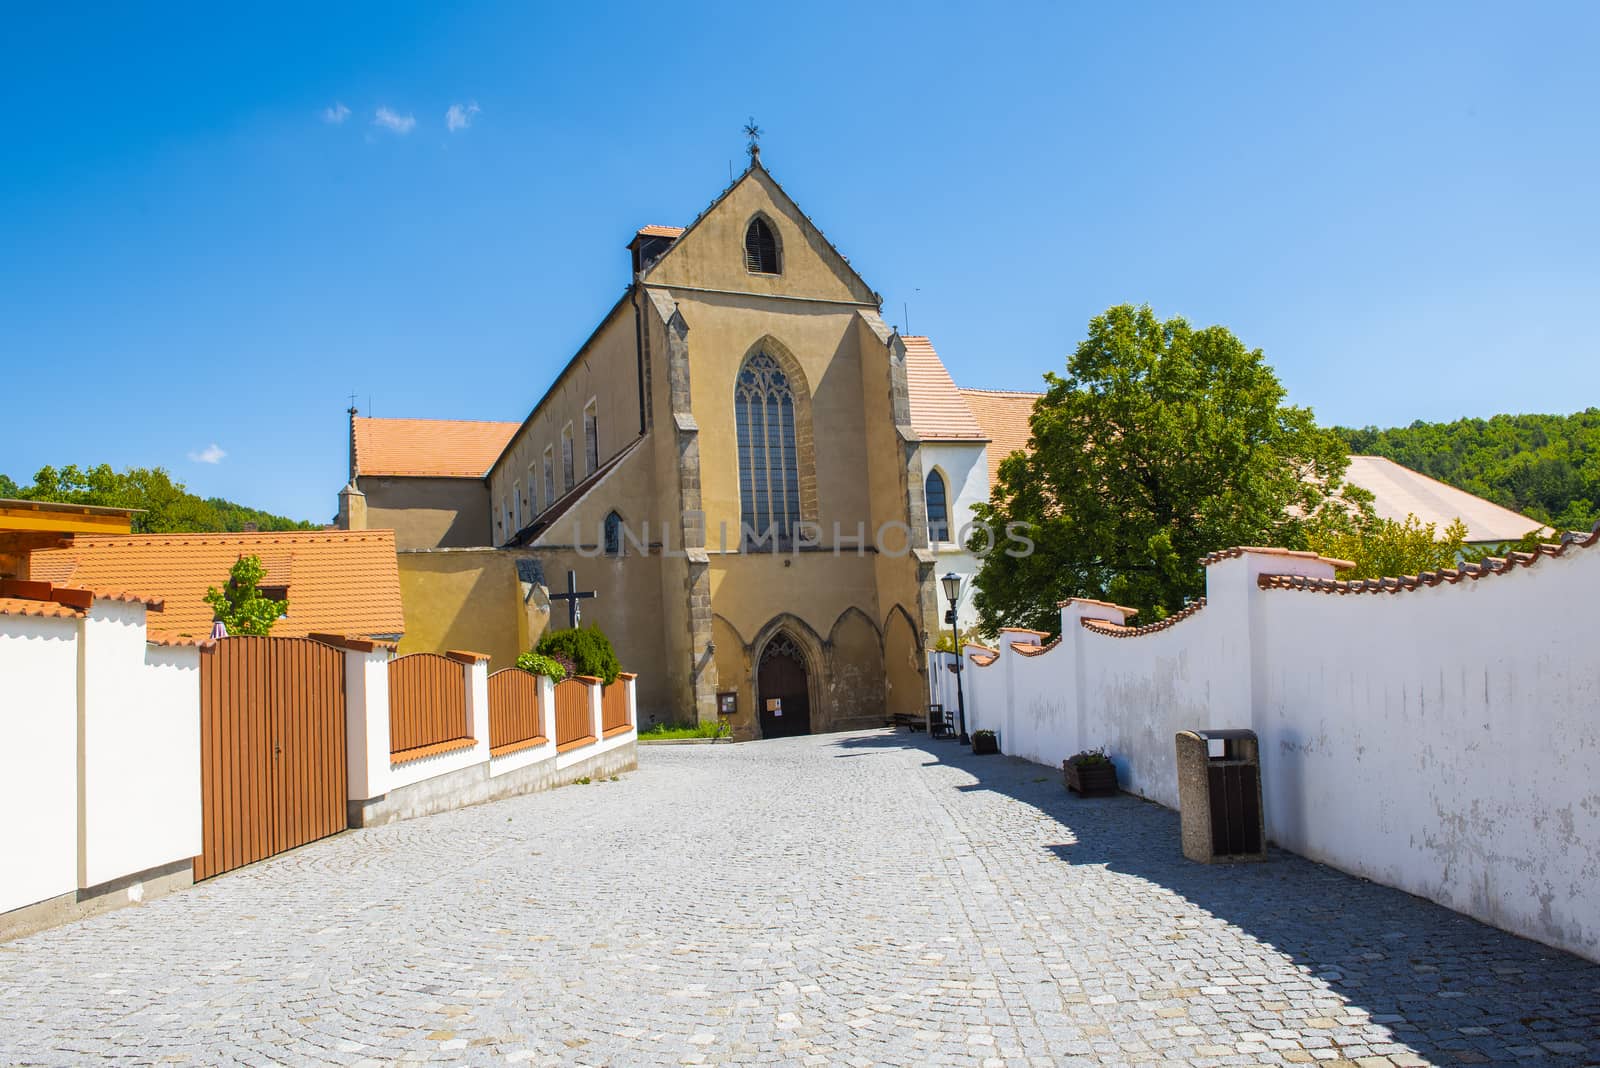 Historic christian monastery Zlata Koruna (Golden Crown) established by king Premysl Otakar II in 13th century. Southern Czech Republic